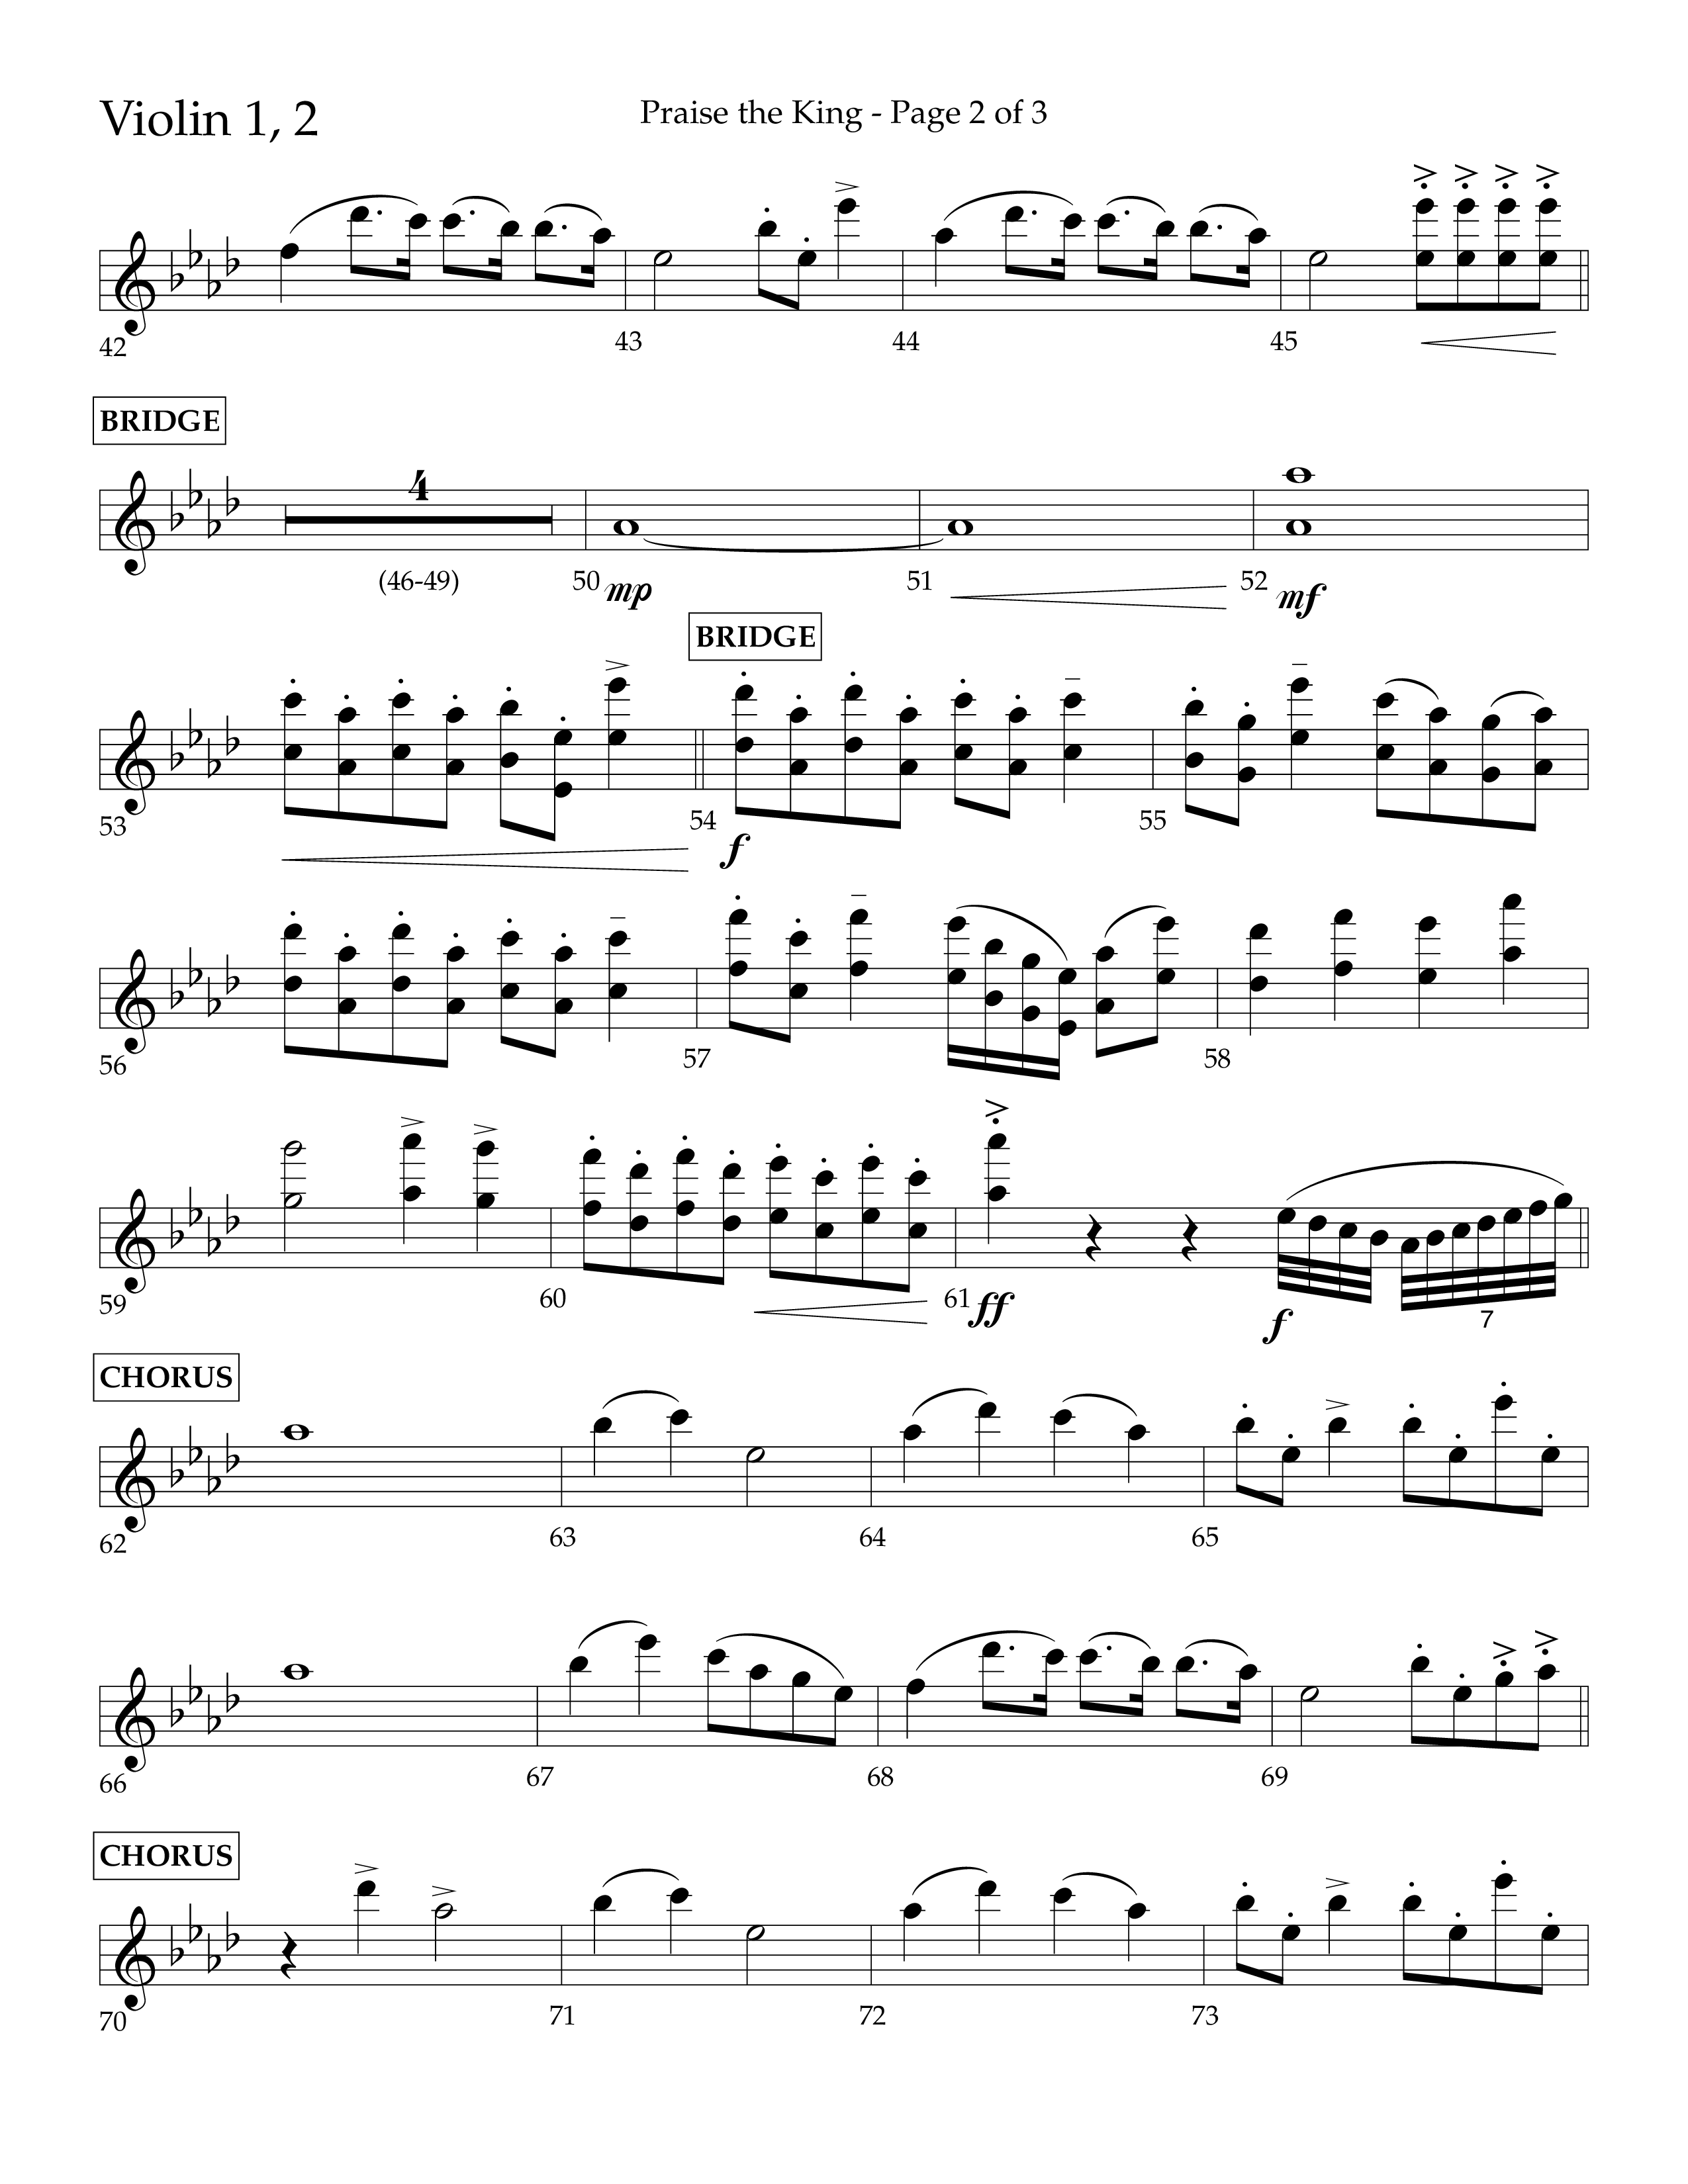 Praise The King (Choral Anthem SATB) Violin 1/2 (Lifeway Choral / Arr. Phil Nitz)